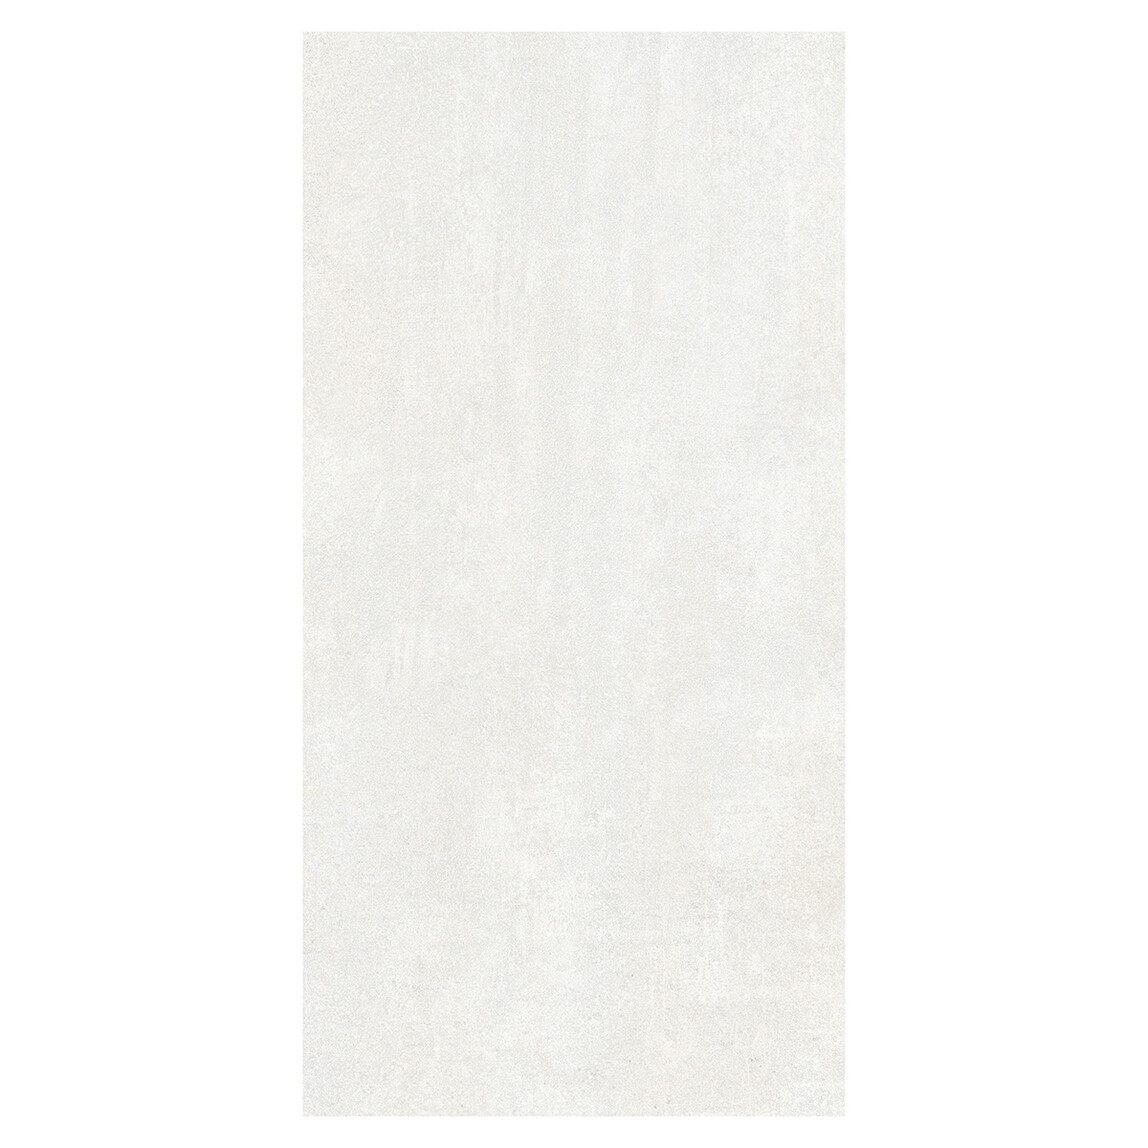    Ege Seramik Torino 32x64 cm Beyaz 1 Kutu=1,64 m2 